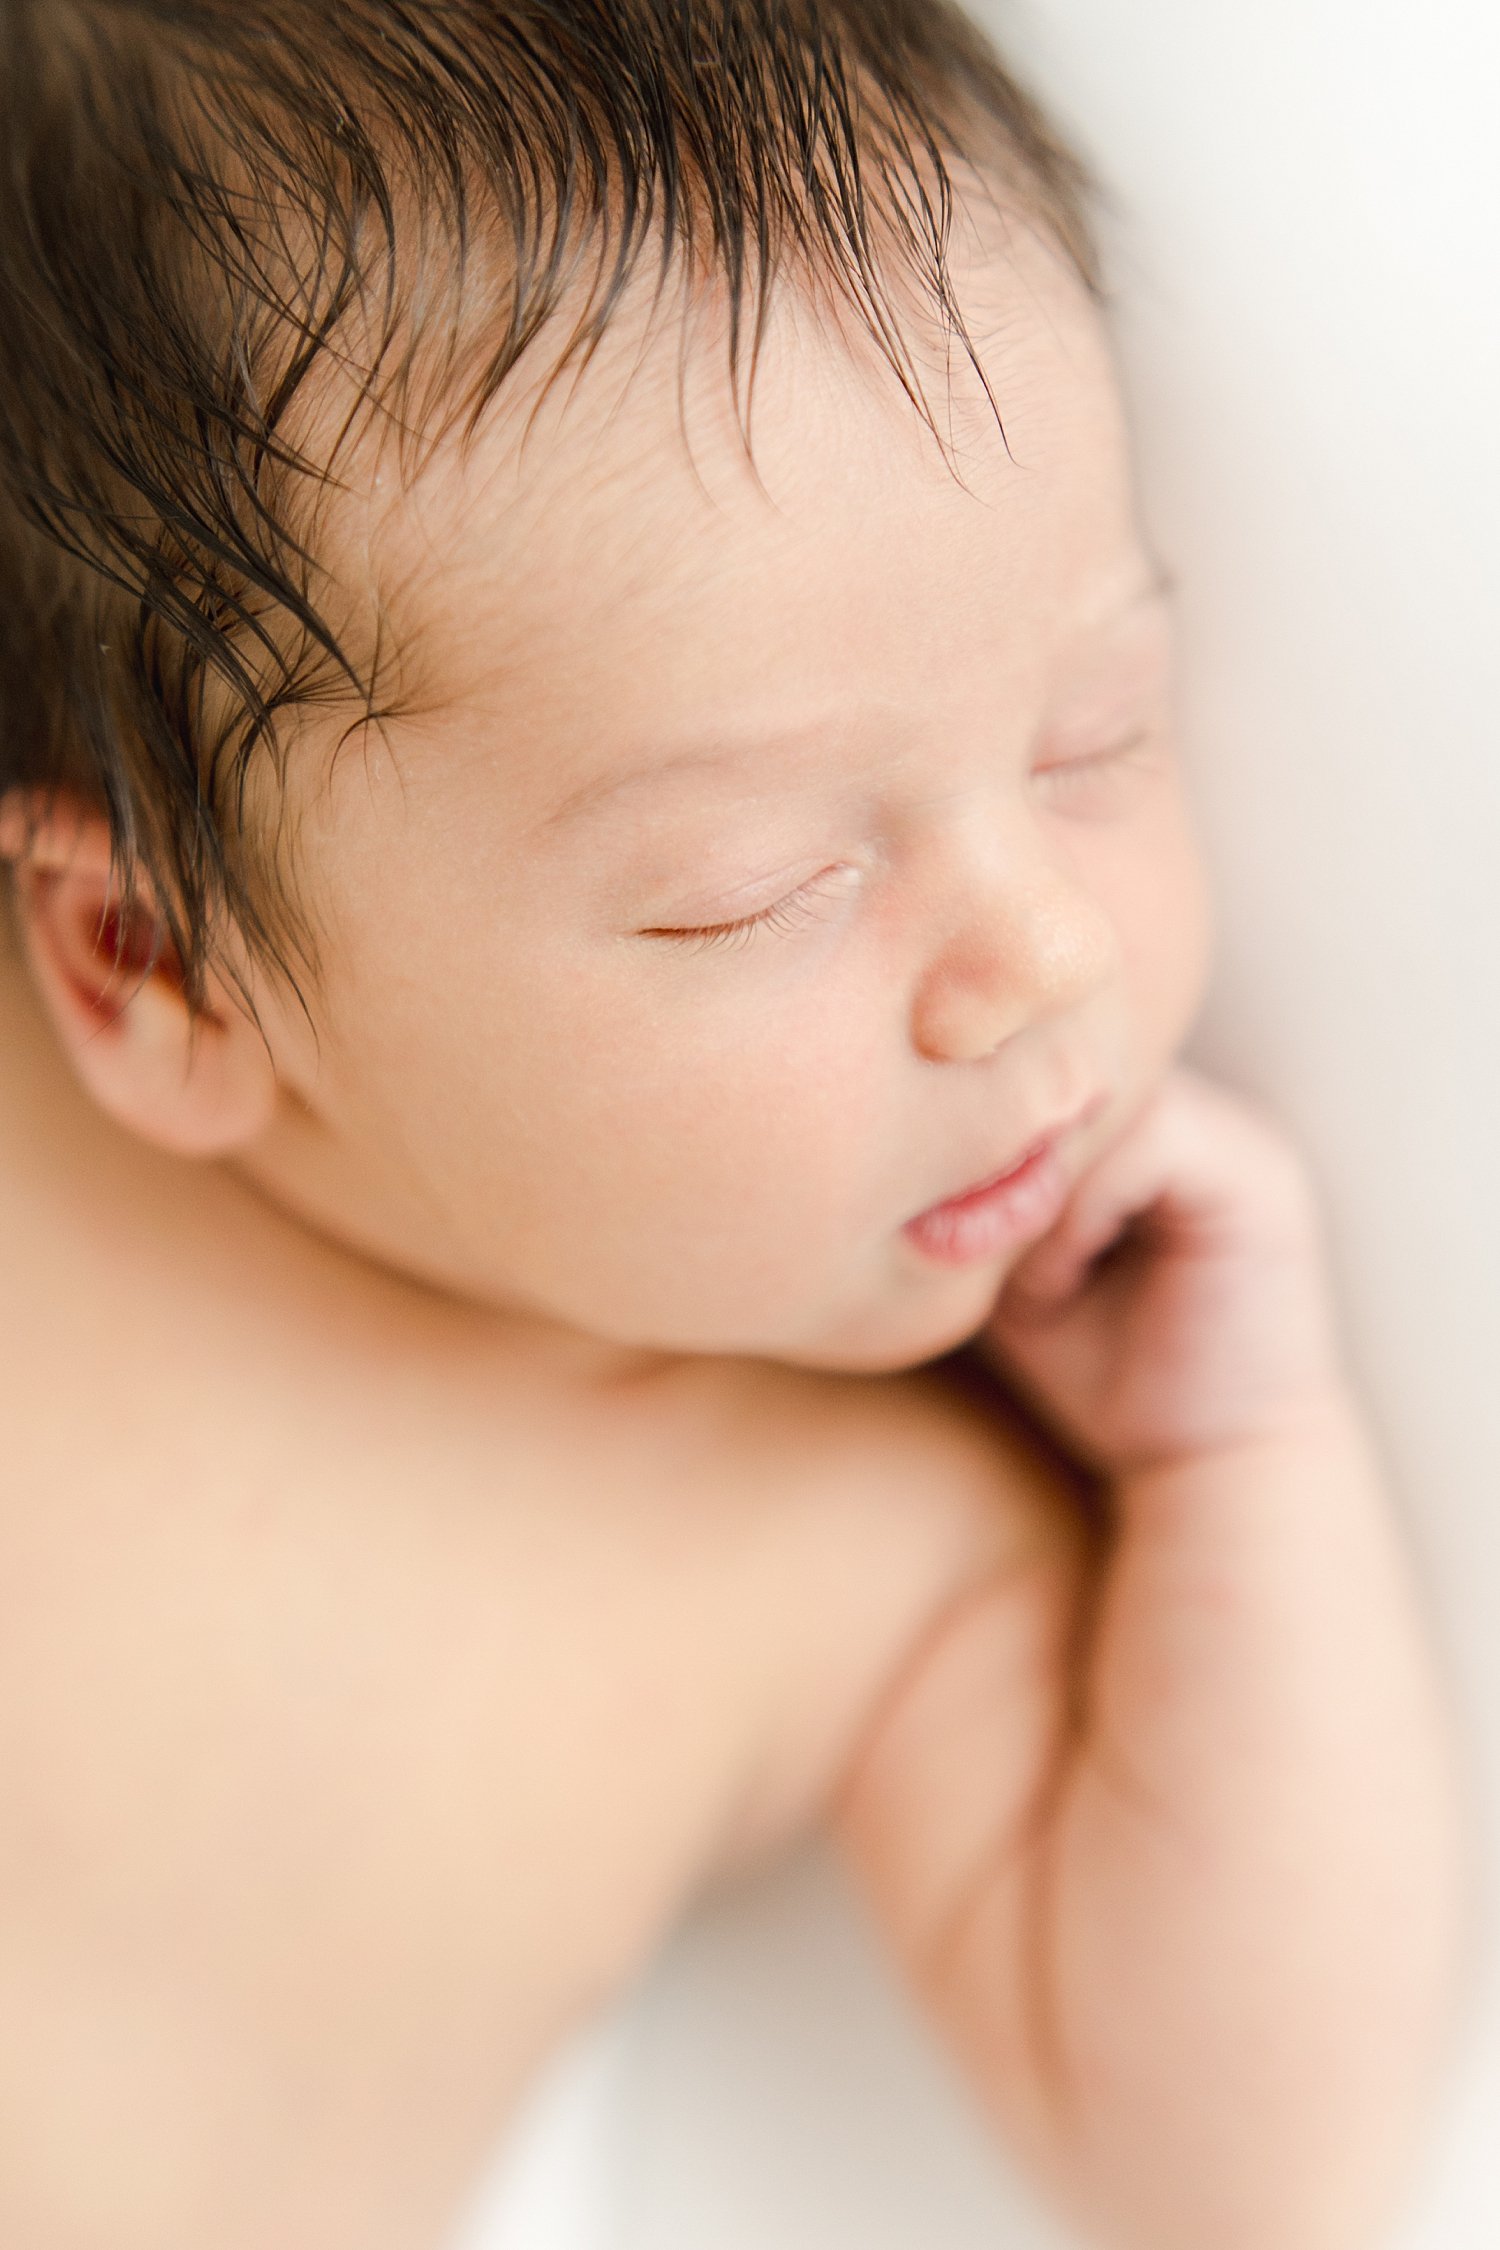 Baby boy with dark brown hair sleeping during newborn session | Kristin Wood Photography